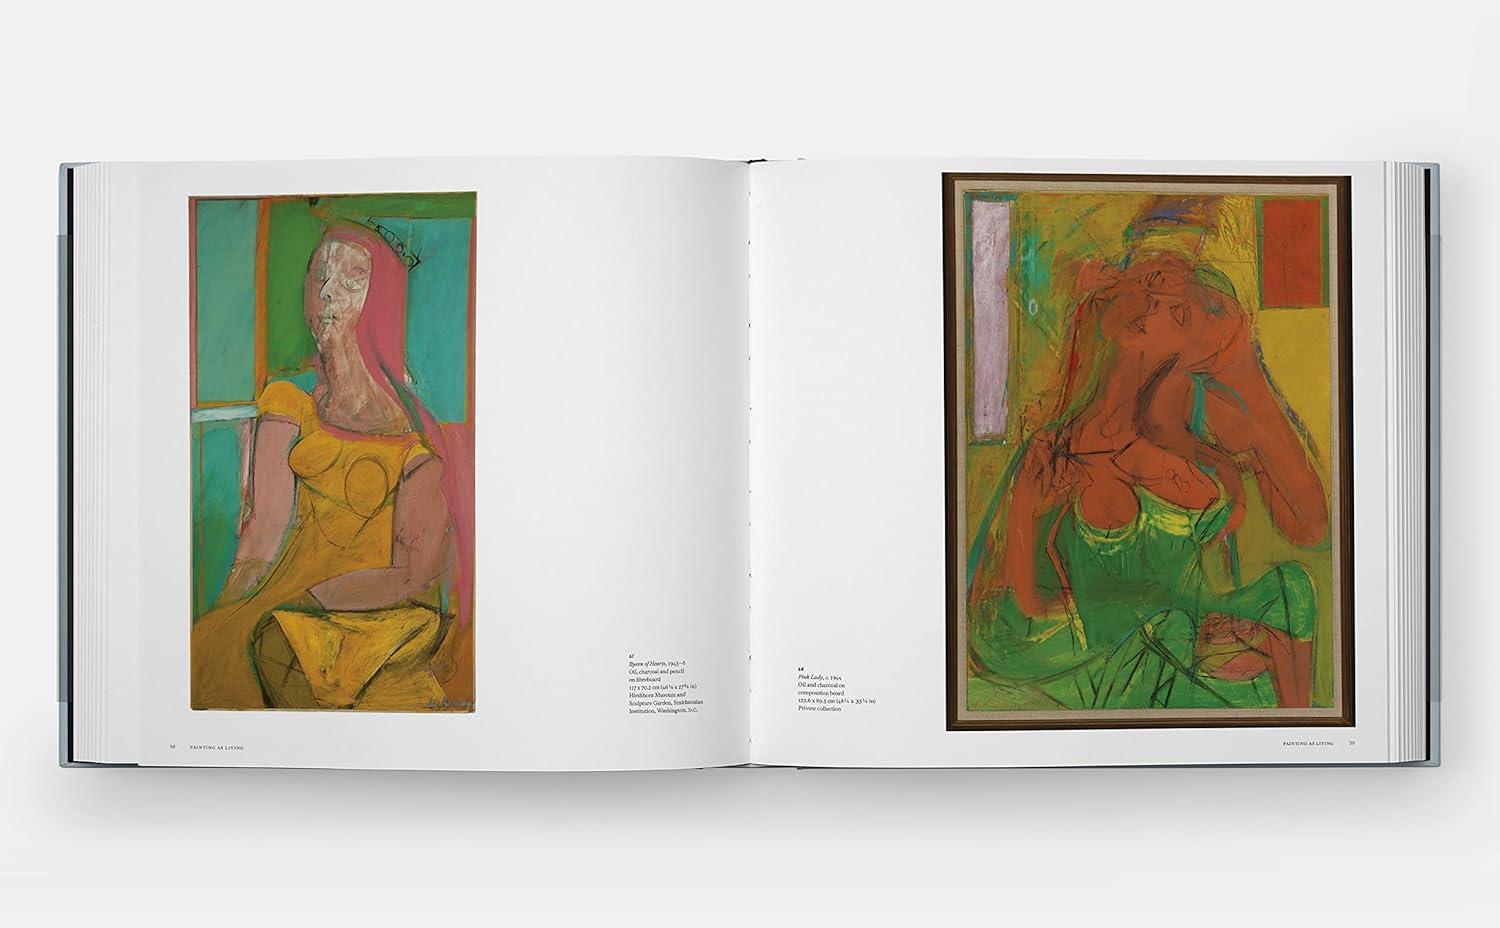 Bild: 9781838666552 | A Way of Living | The Art of Willem de Kooning | Judith Zilczer | Buch